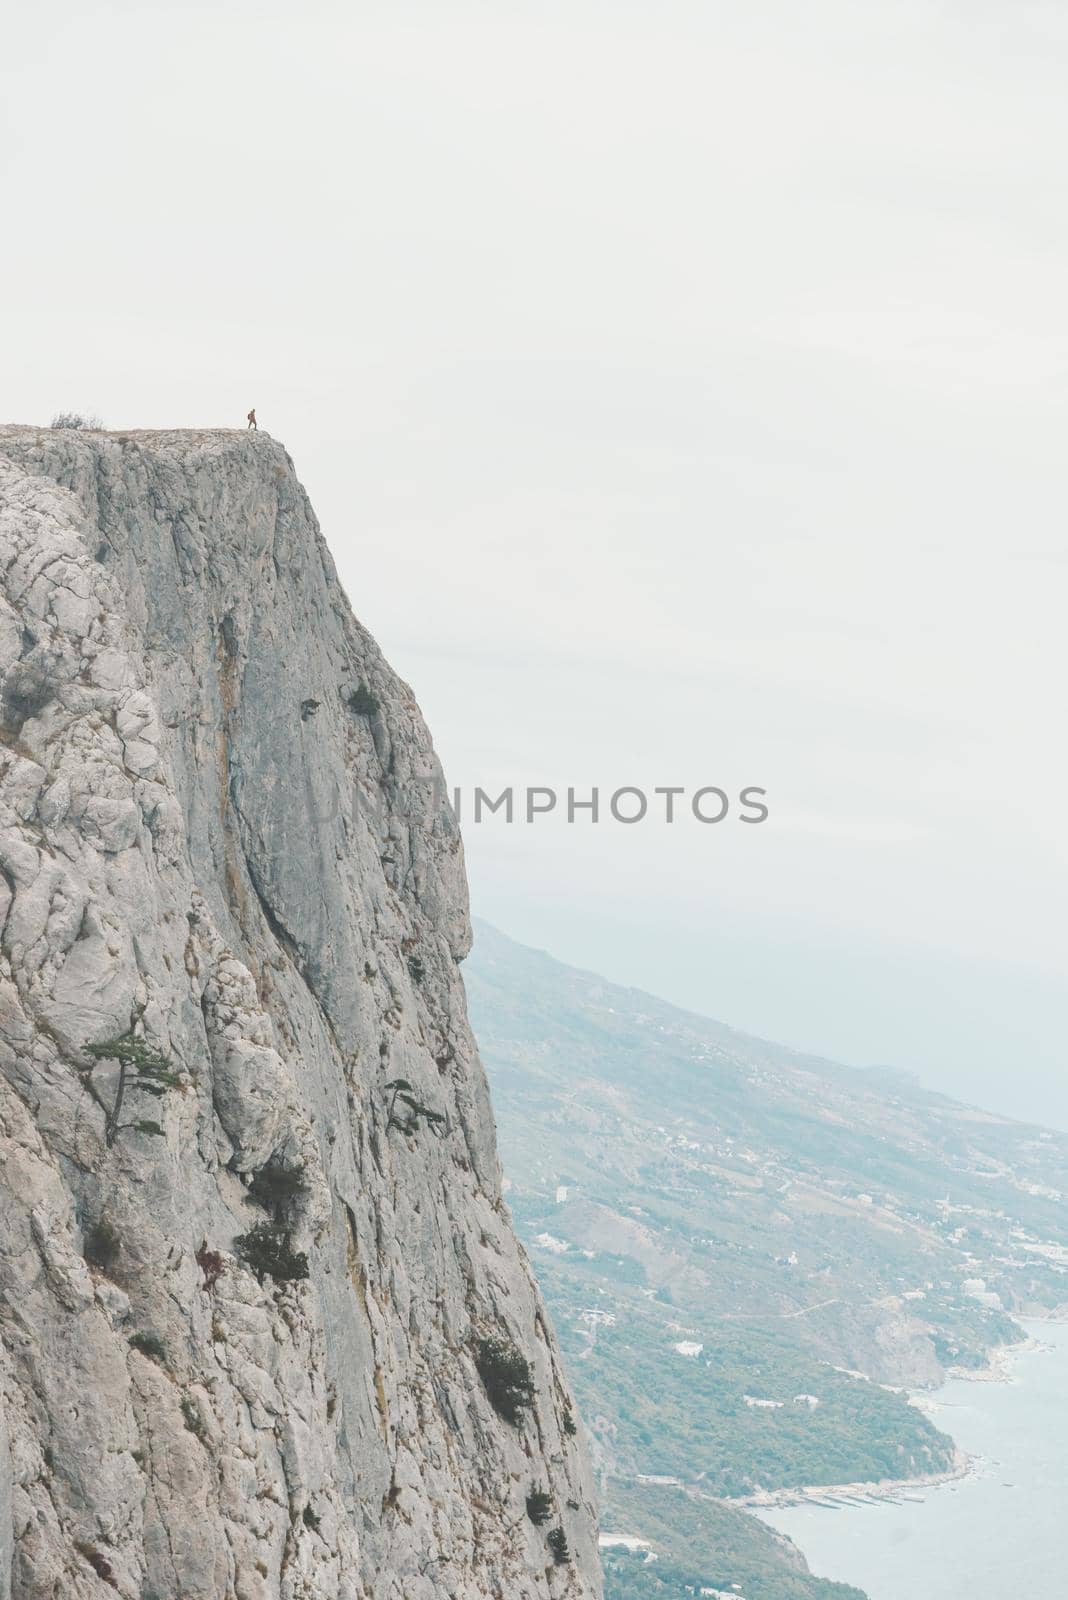 Traveler man standing on edge of cliff Foros kant over coastline, Crimea, Russia. Concept of minimal person in massive landscape.